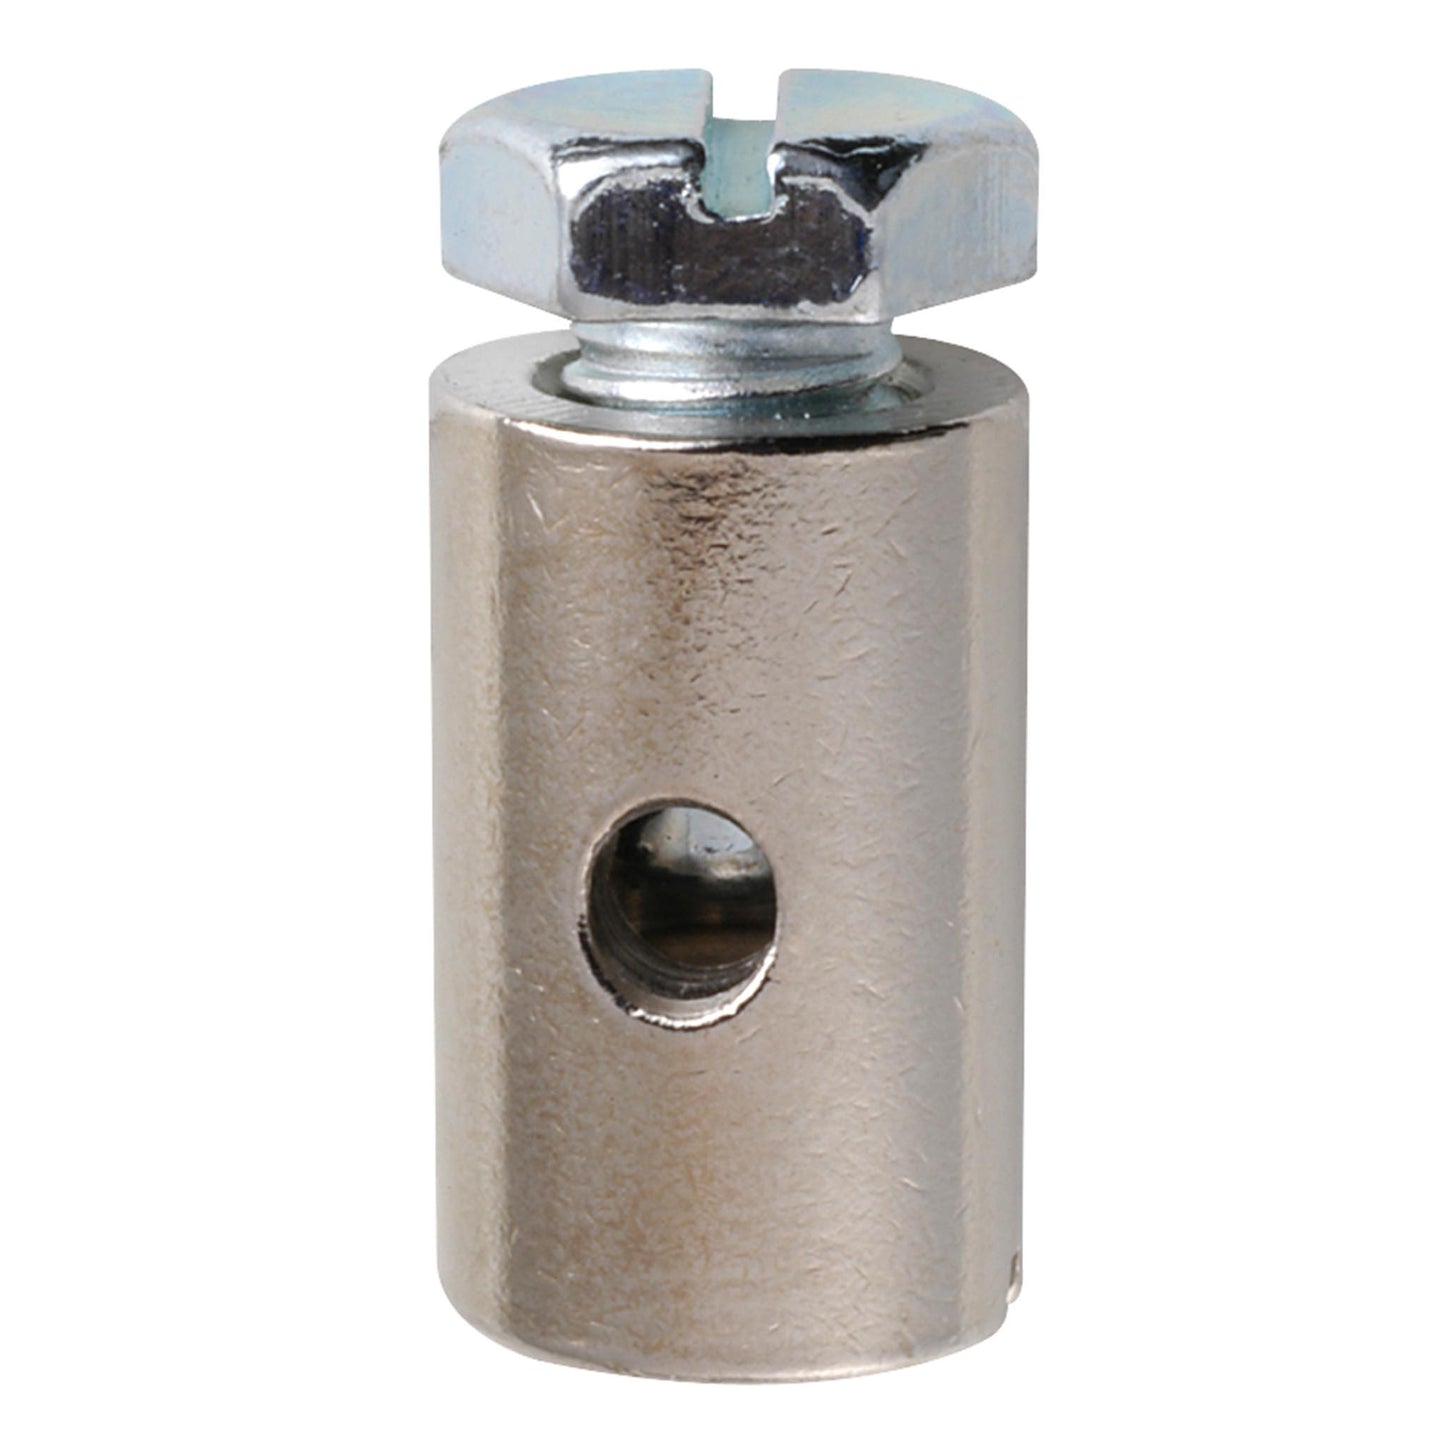 Screw nipple bore diameter 3.5 mm, nickel-plated brass